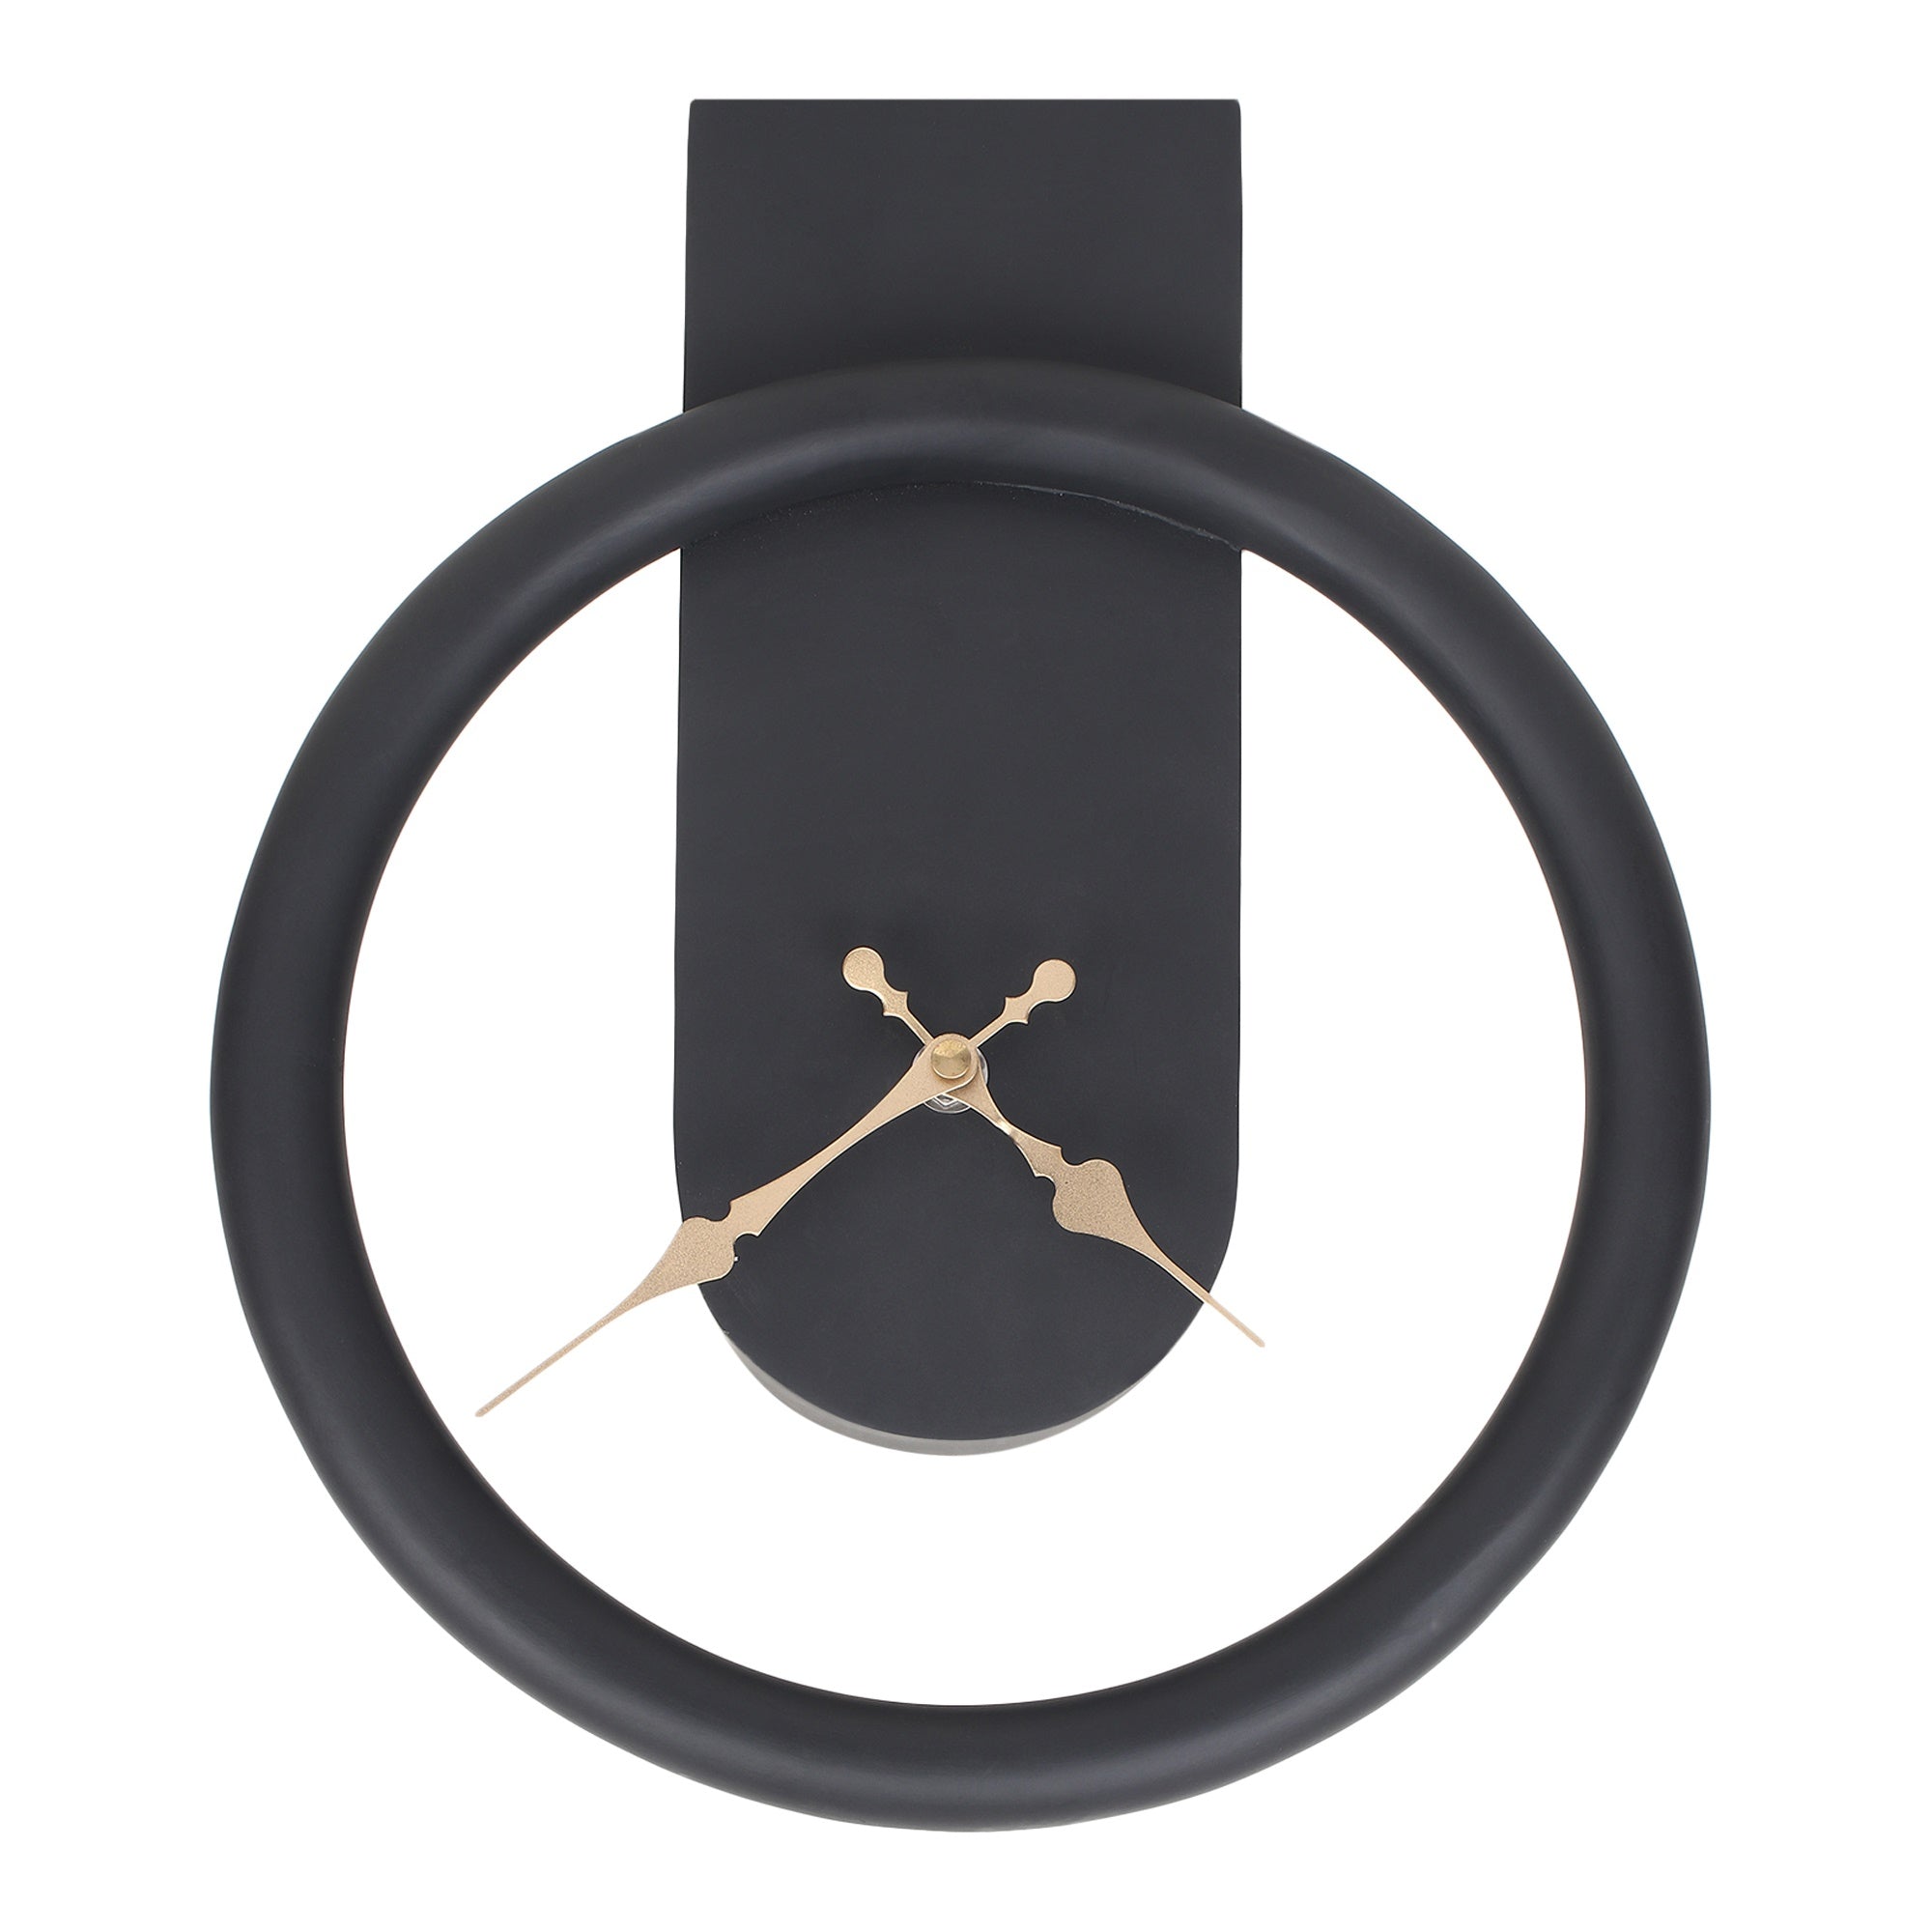 Wood's Dual Essence Clock in Black